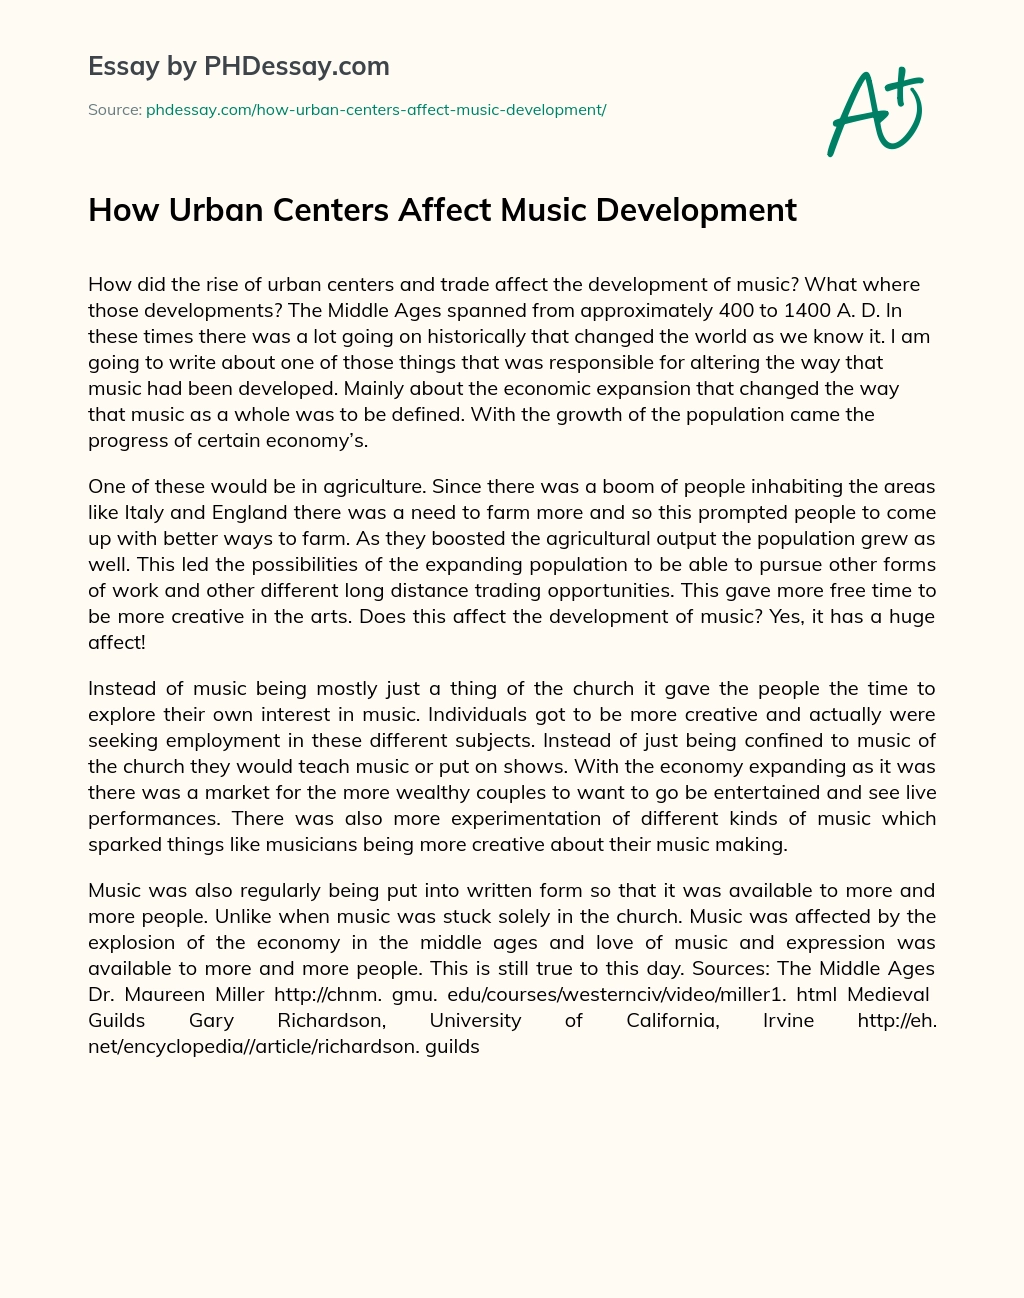 How Urban Centers Affect Music Development essay